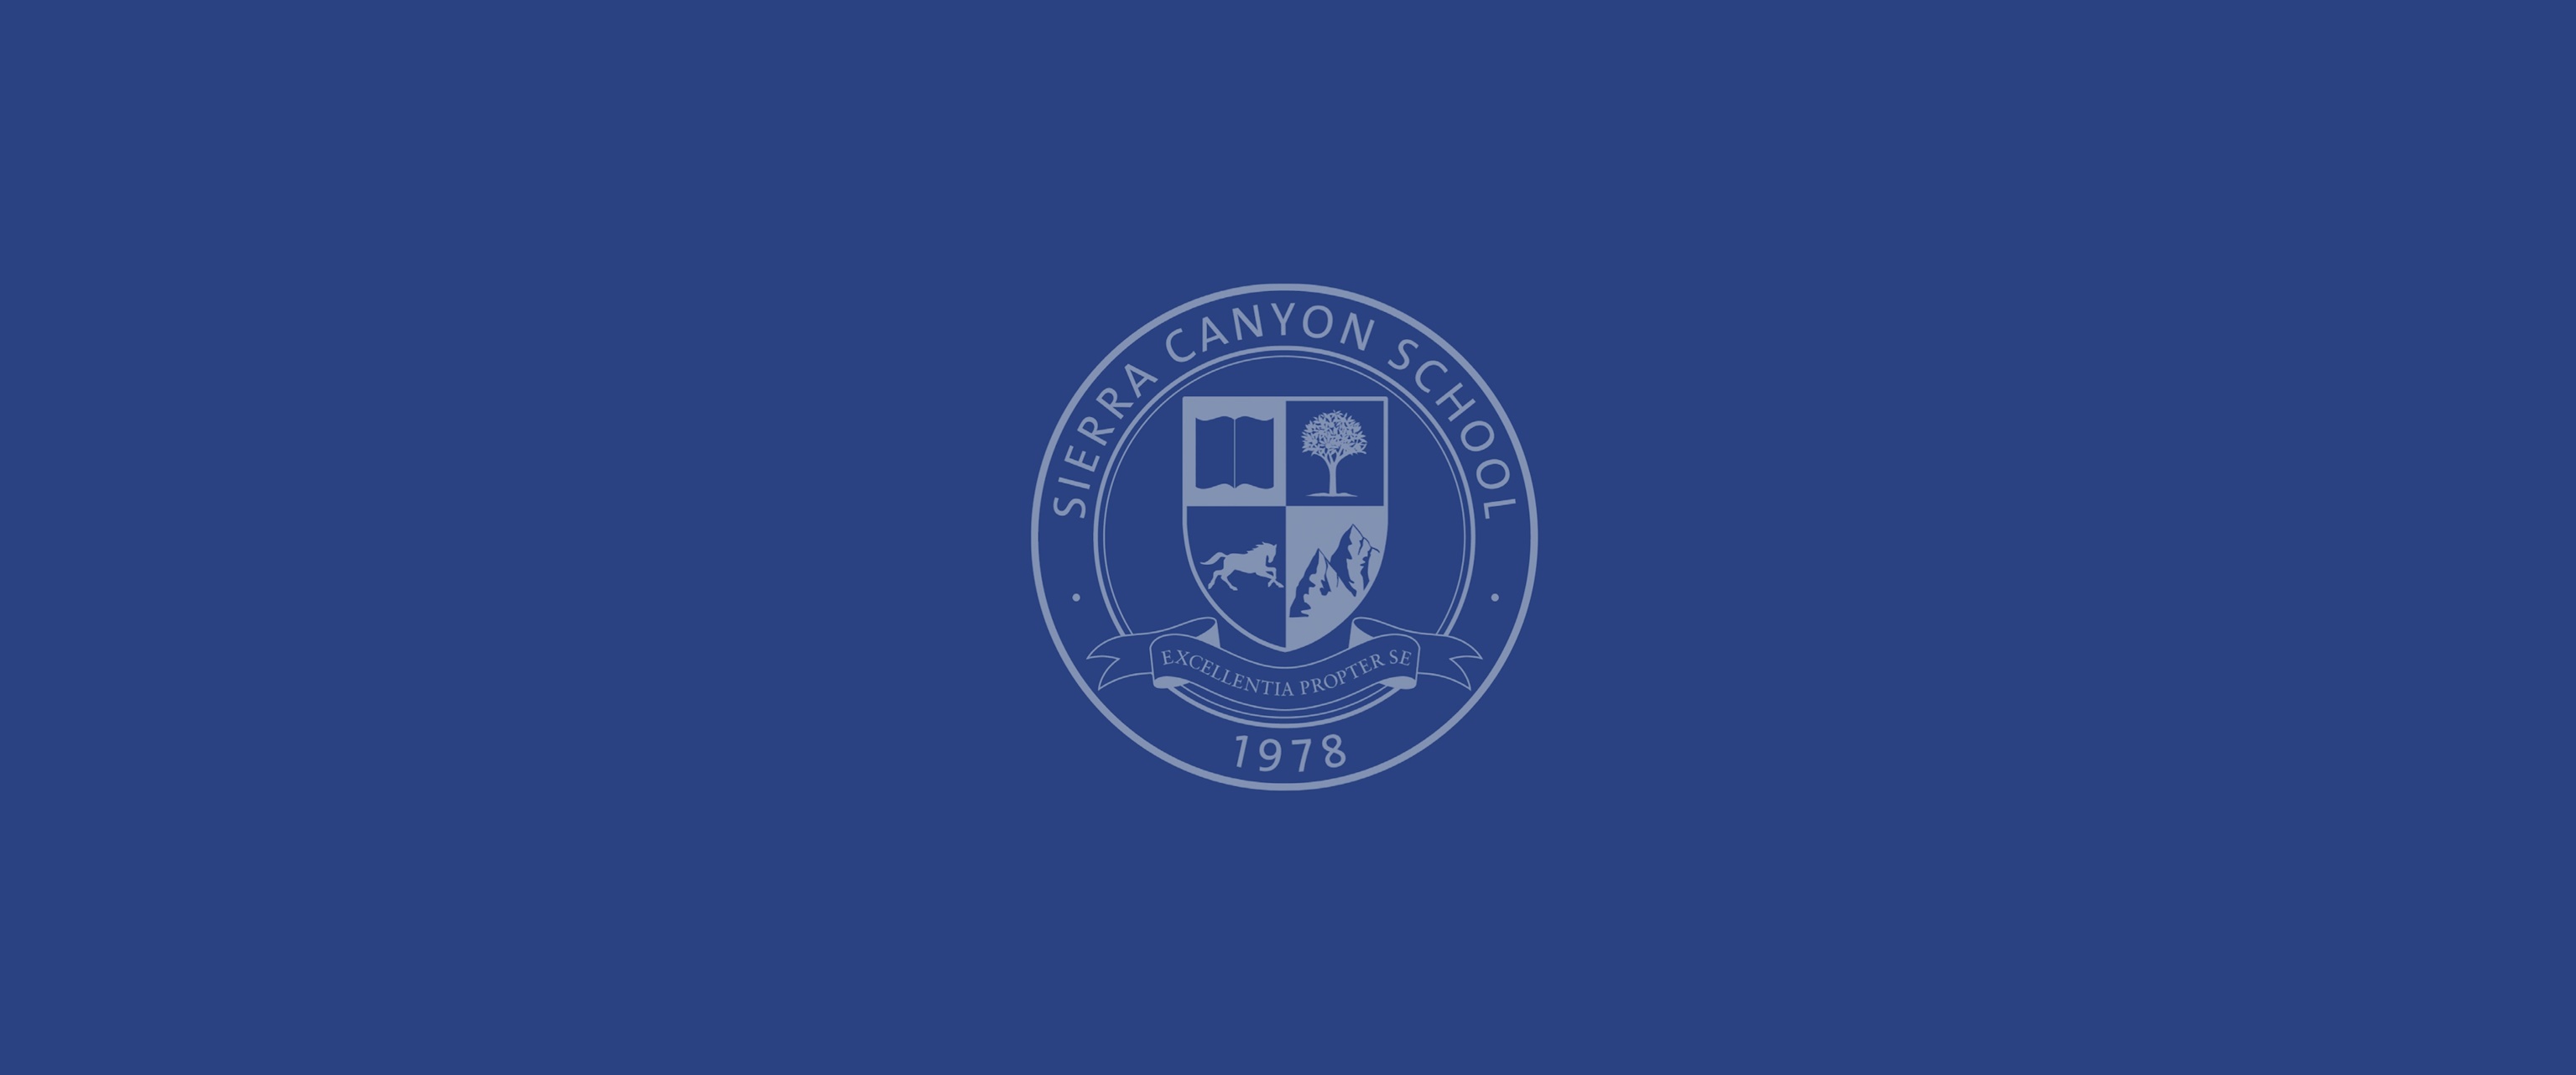 Sierra Canyon School logo